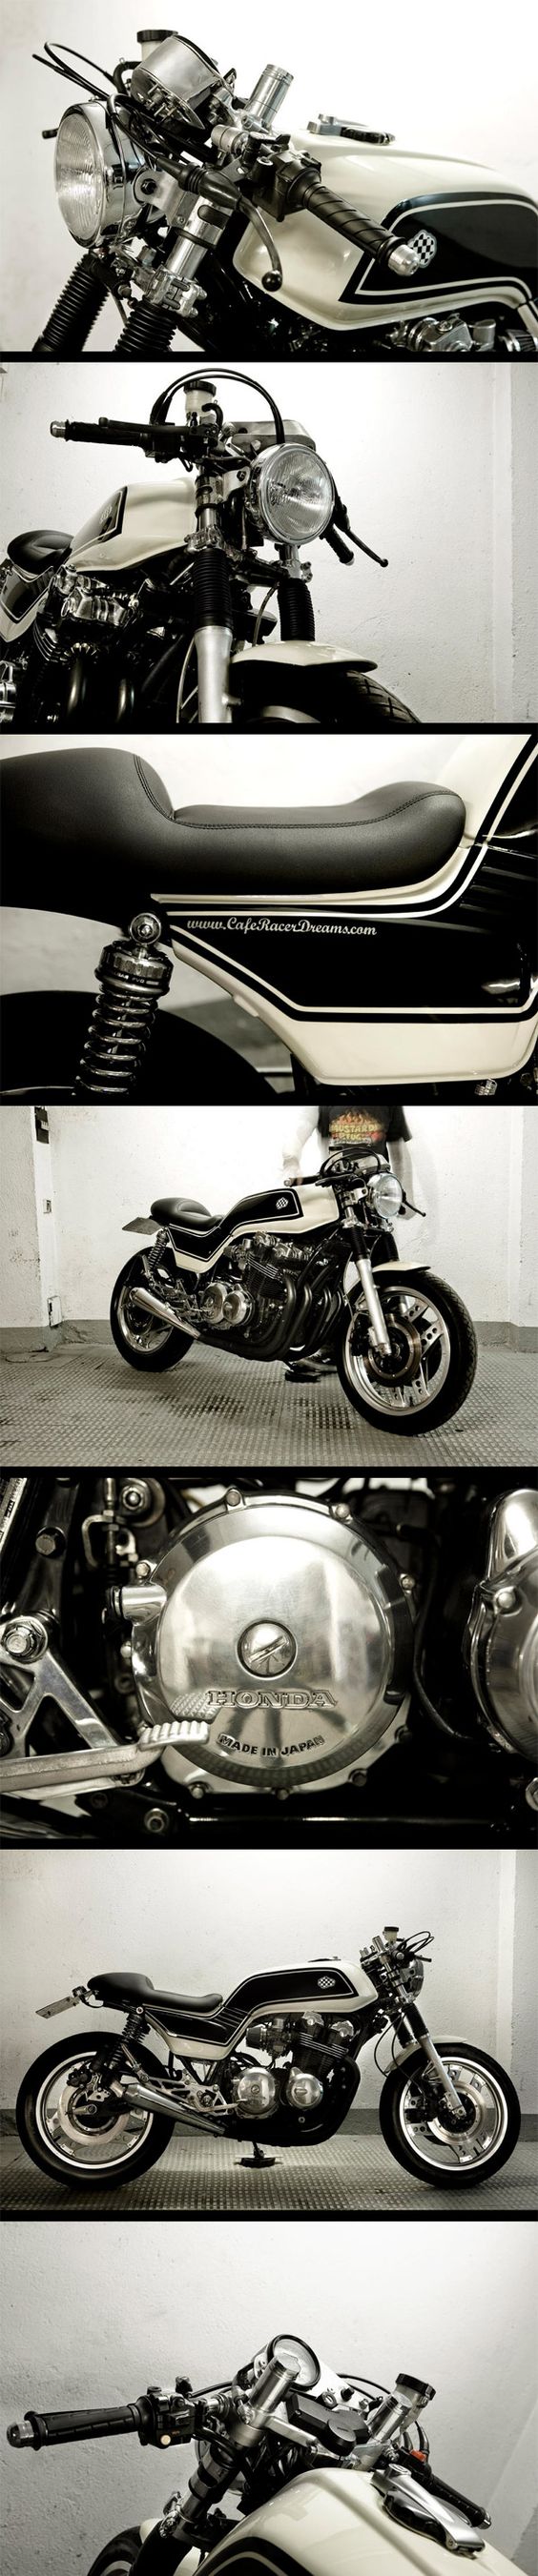 Cafe Racer Dreams : Honda CB900 Bol d'or Cafe Racer